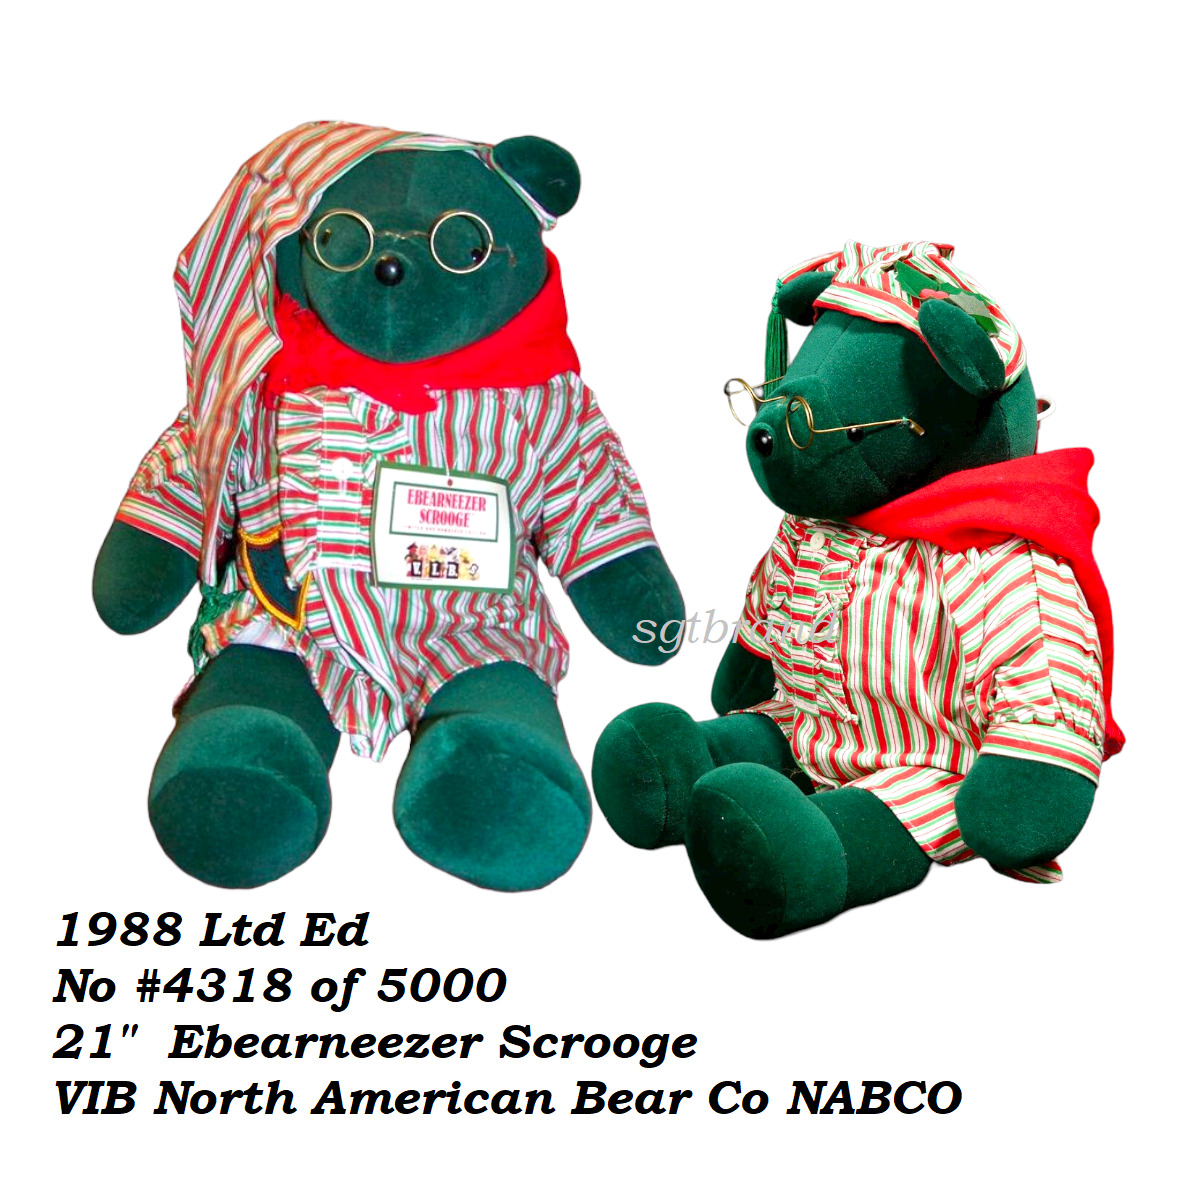 Ebearneezer Scrooge 1988 Ltd Ed No 4318 of 5000 VIB North American Bear Co NABCO